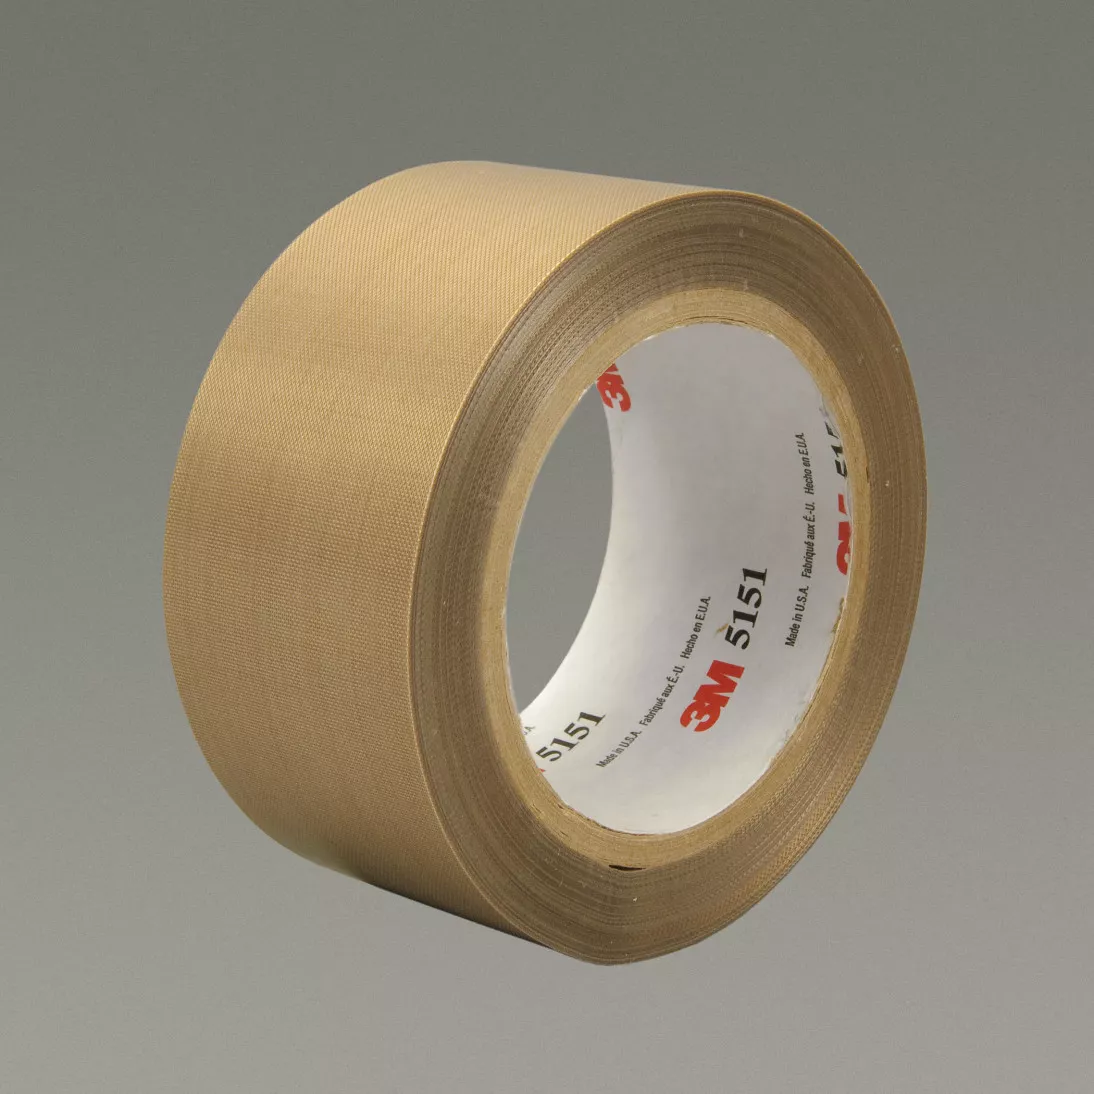 3M™ General Purpose PTFE Glass Cloth Tape 5151, Light Brown, 3 in x 36
yd, 5.3 mil, 12 rolls per case